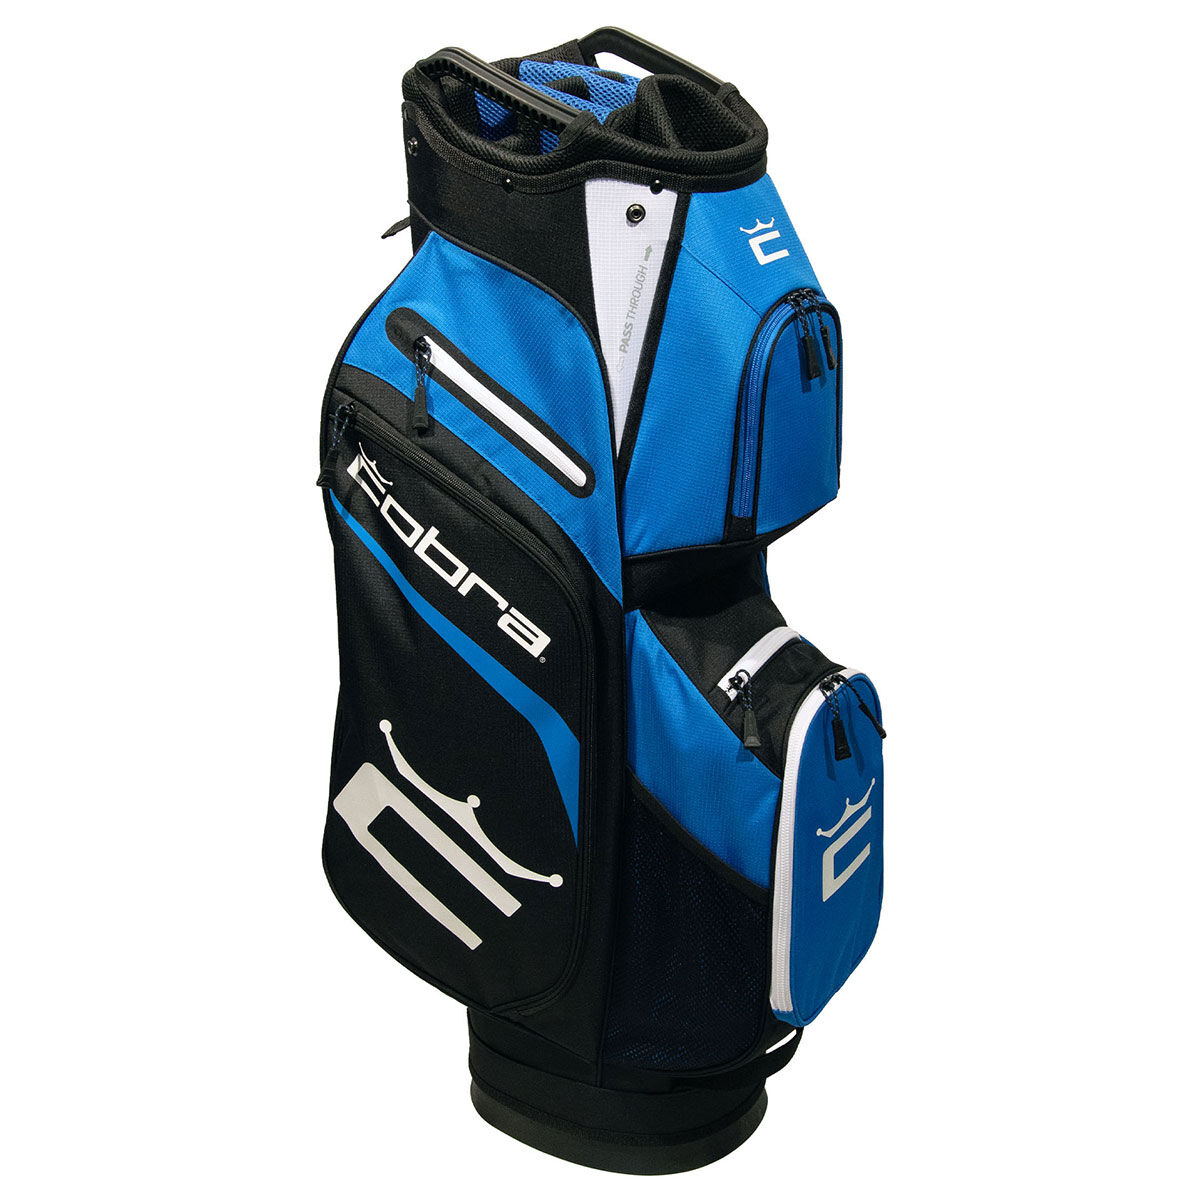 COBRA Signature Golf Cart Bag, Black/blue, One Size | American Golf